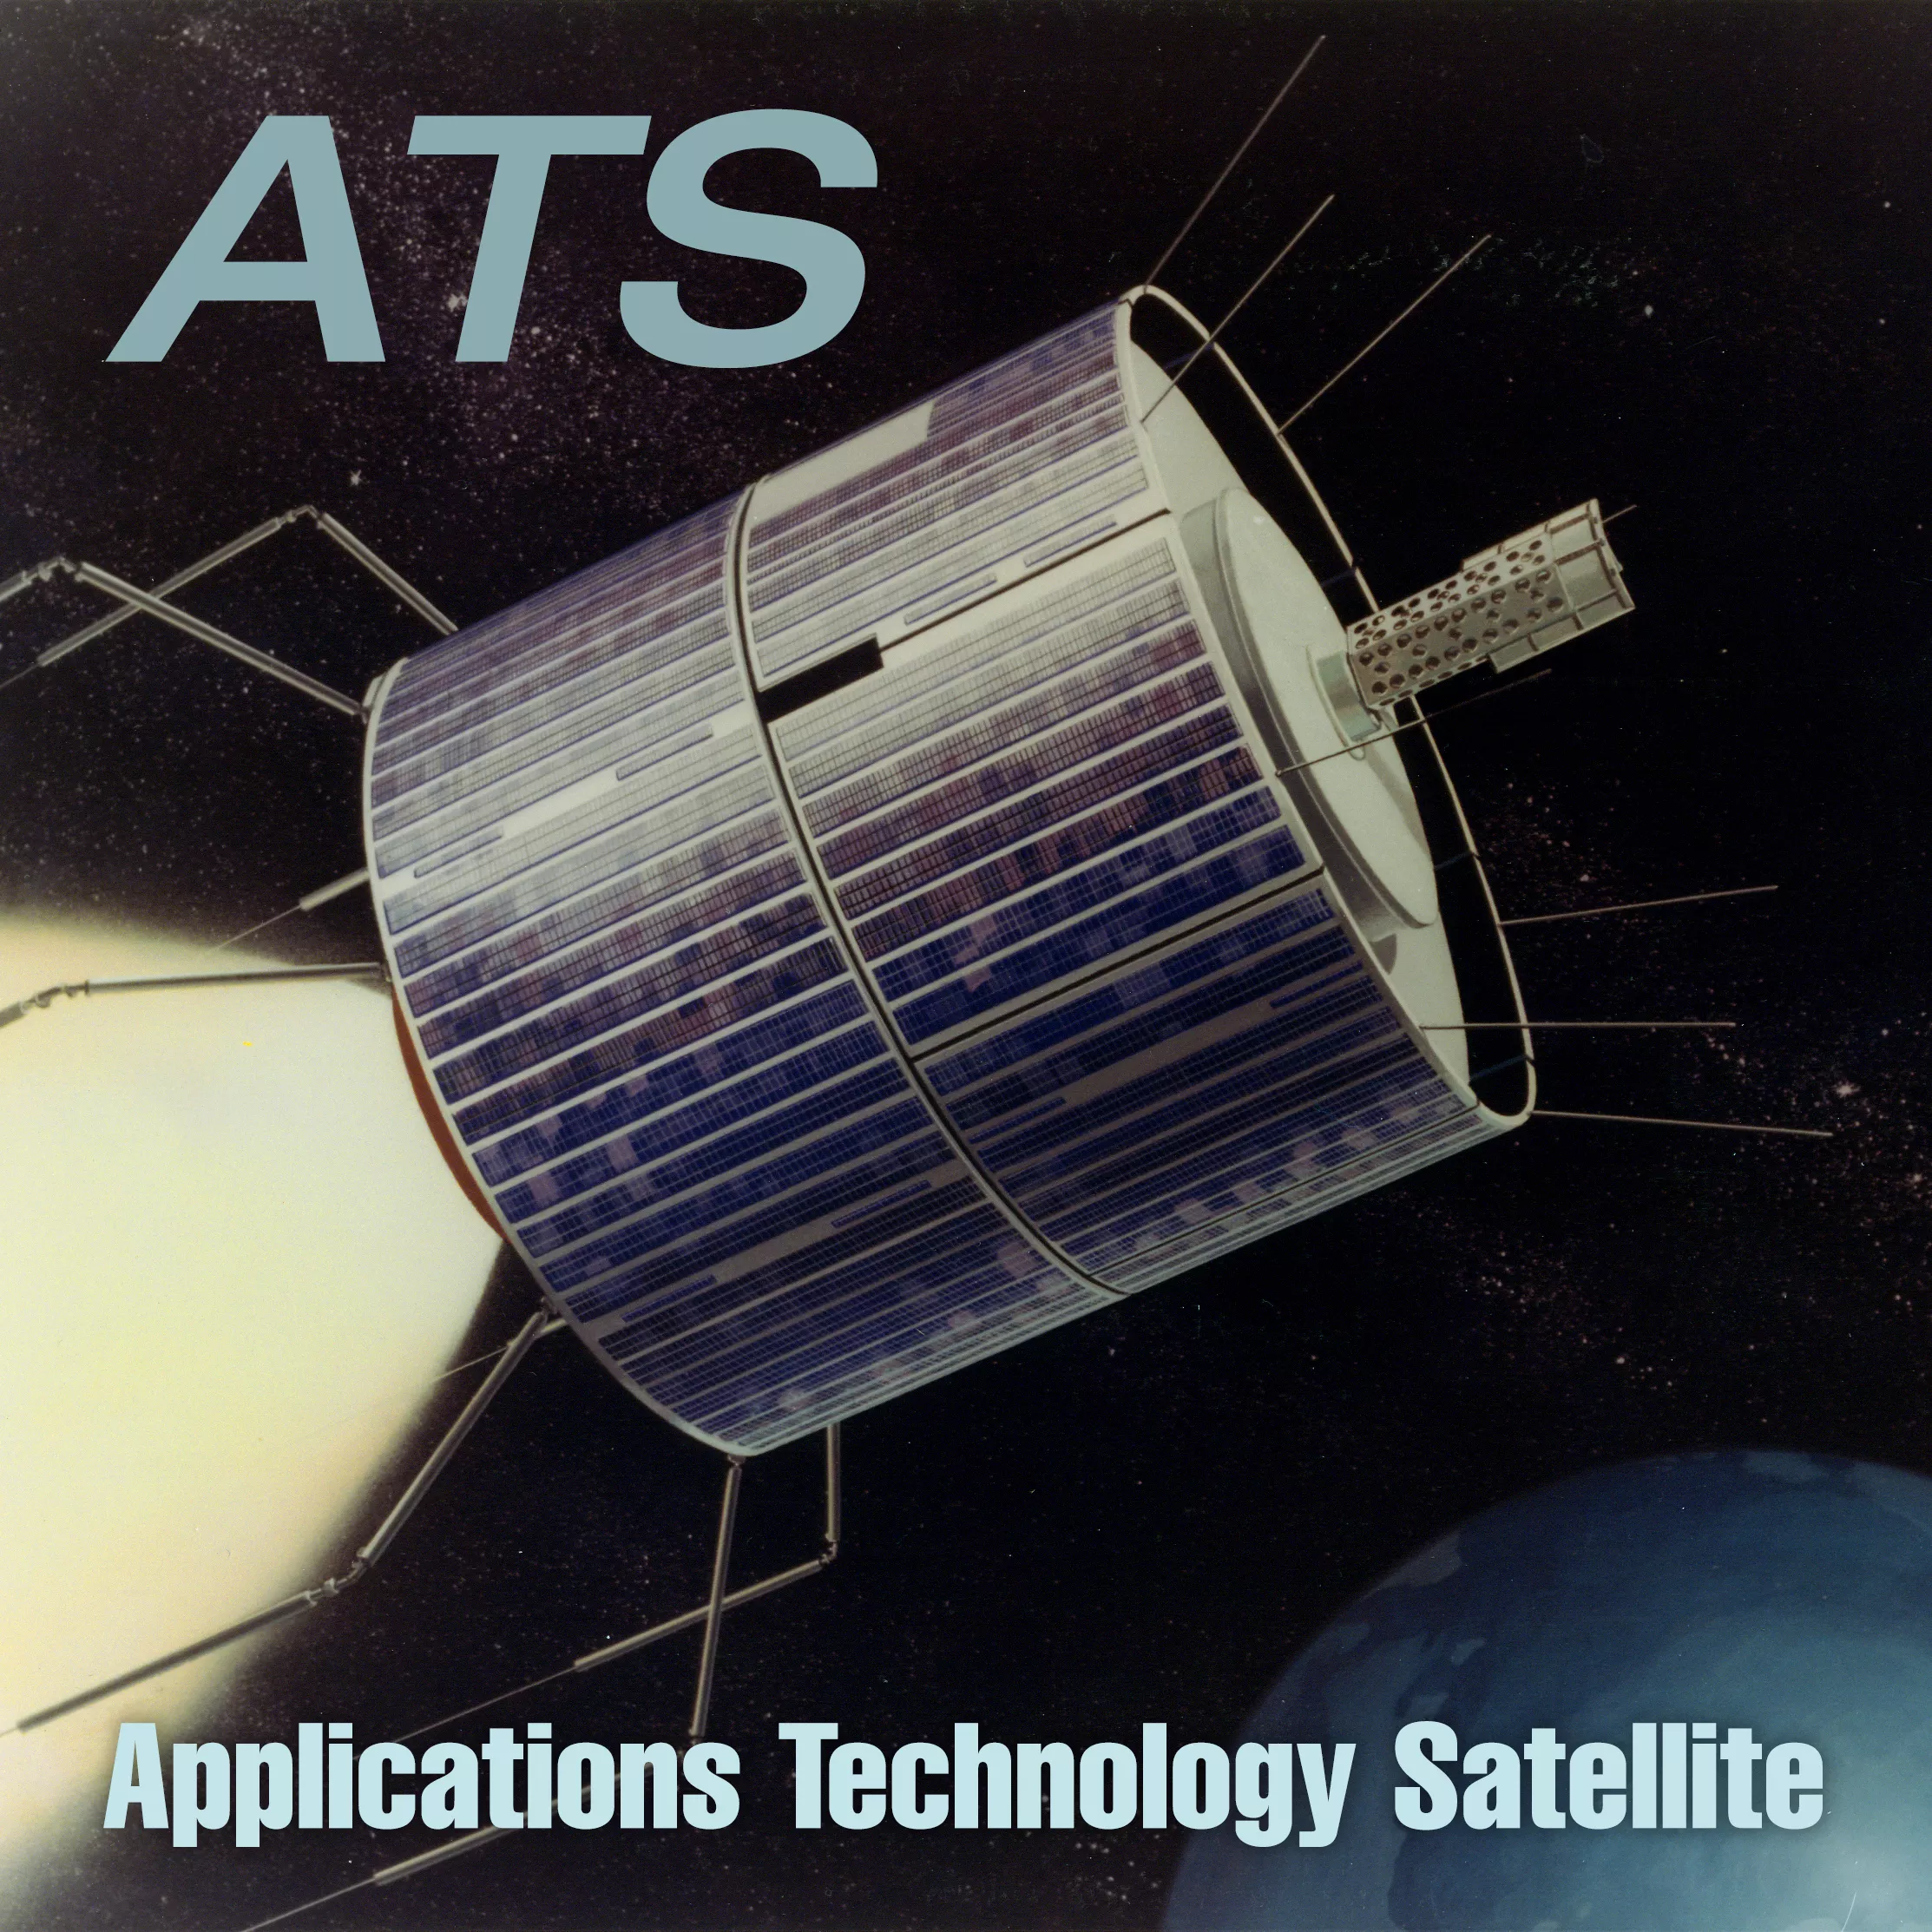 Rendering of ATS satellite.